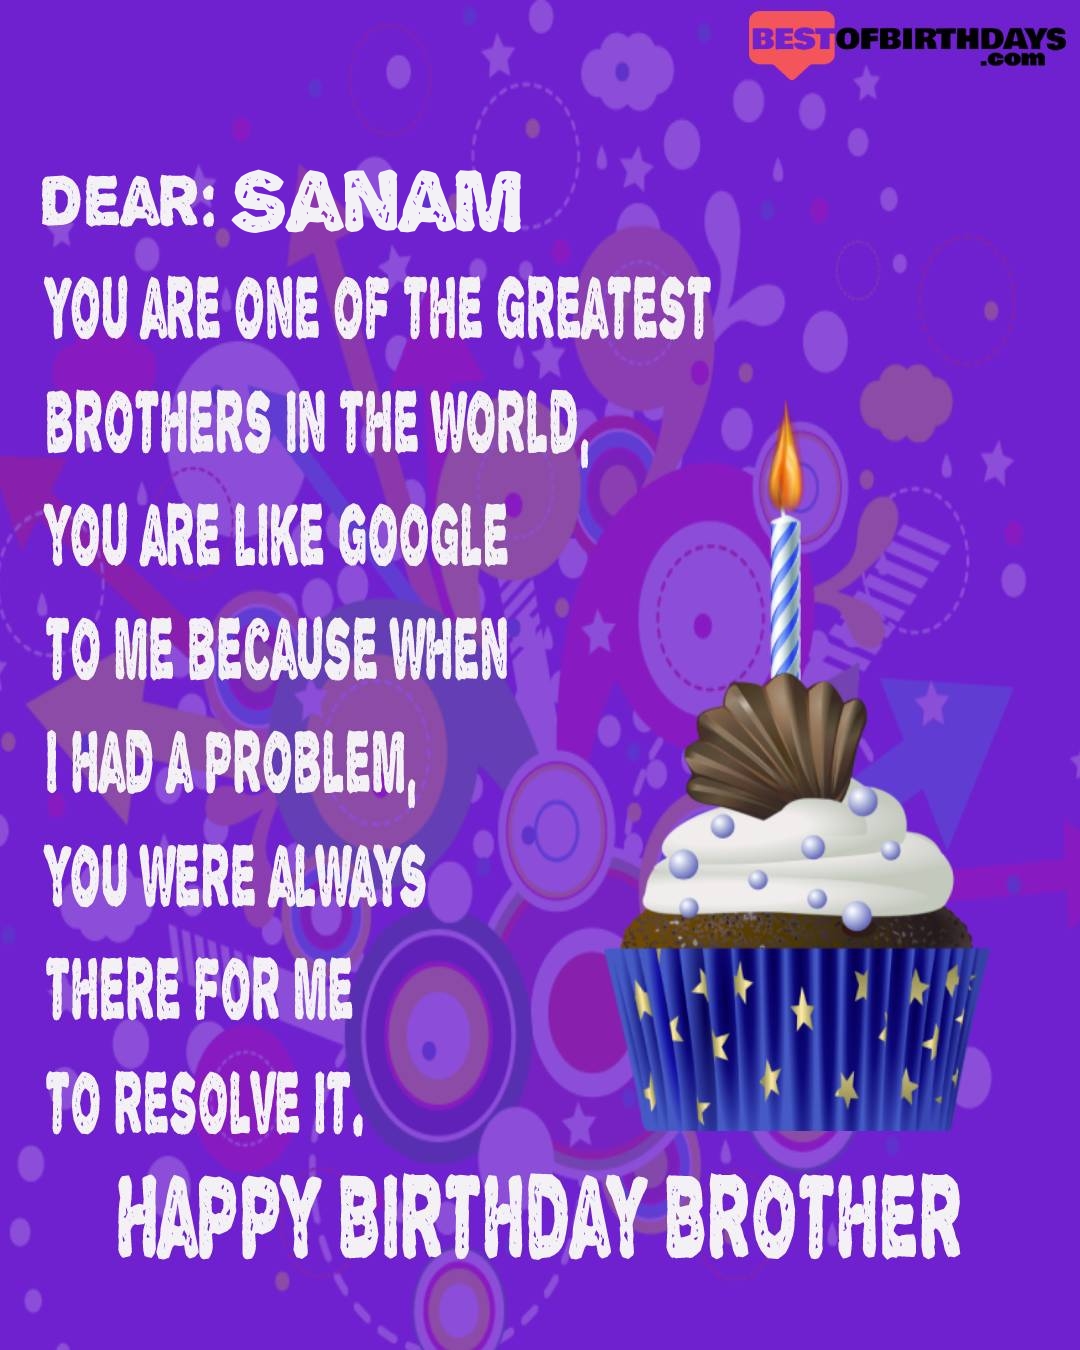 Happy birthday sanam bhai brother bro